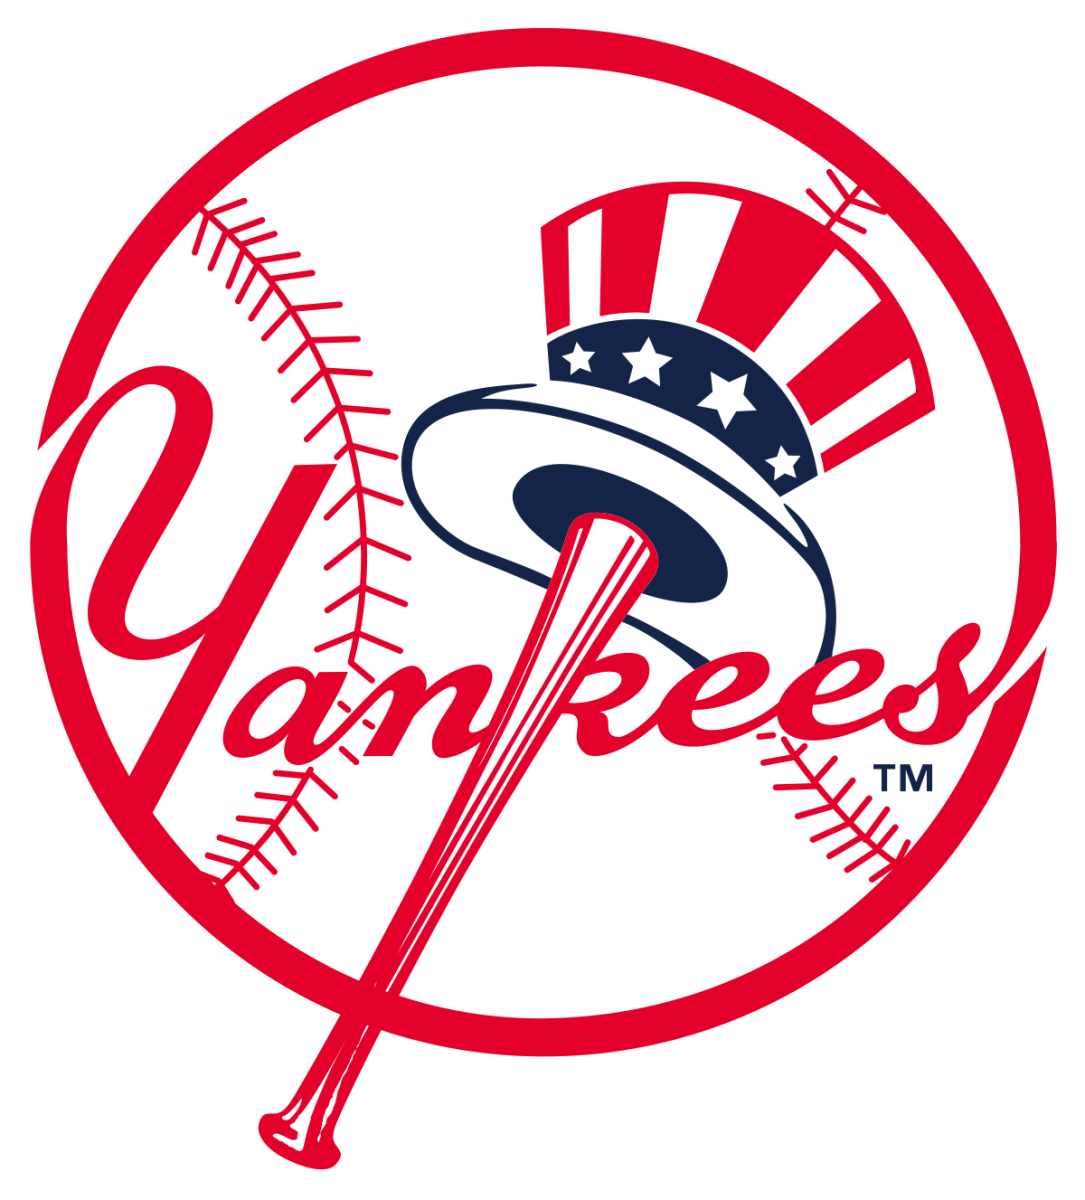 Season+in+review%3A+New+York+Yankees